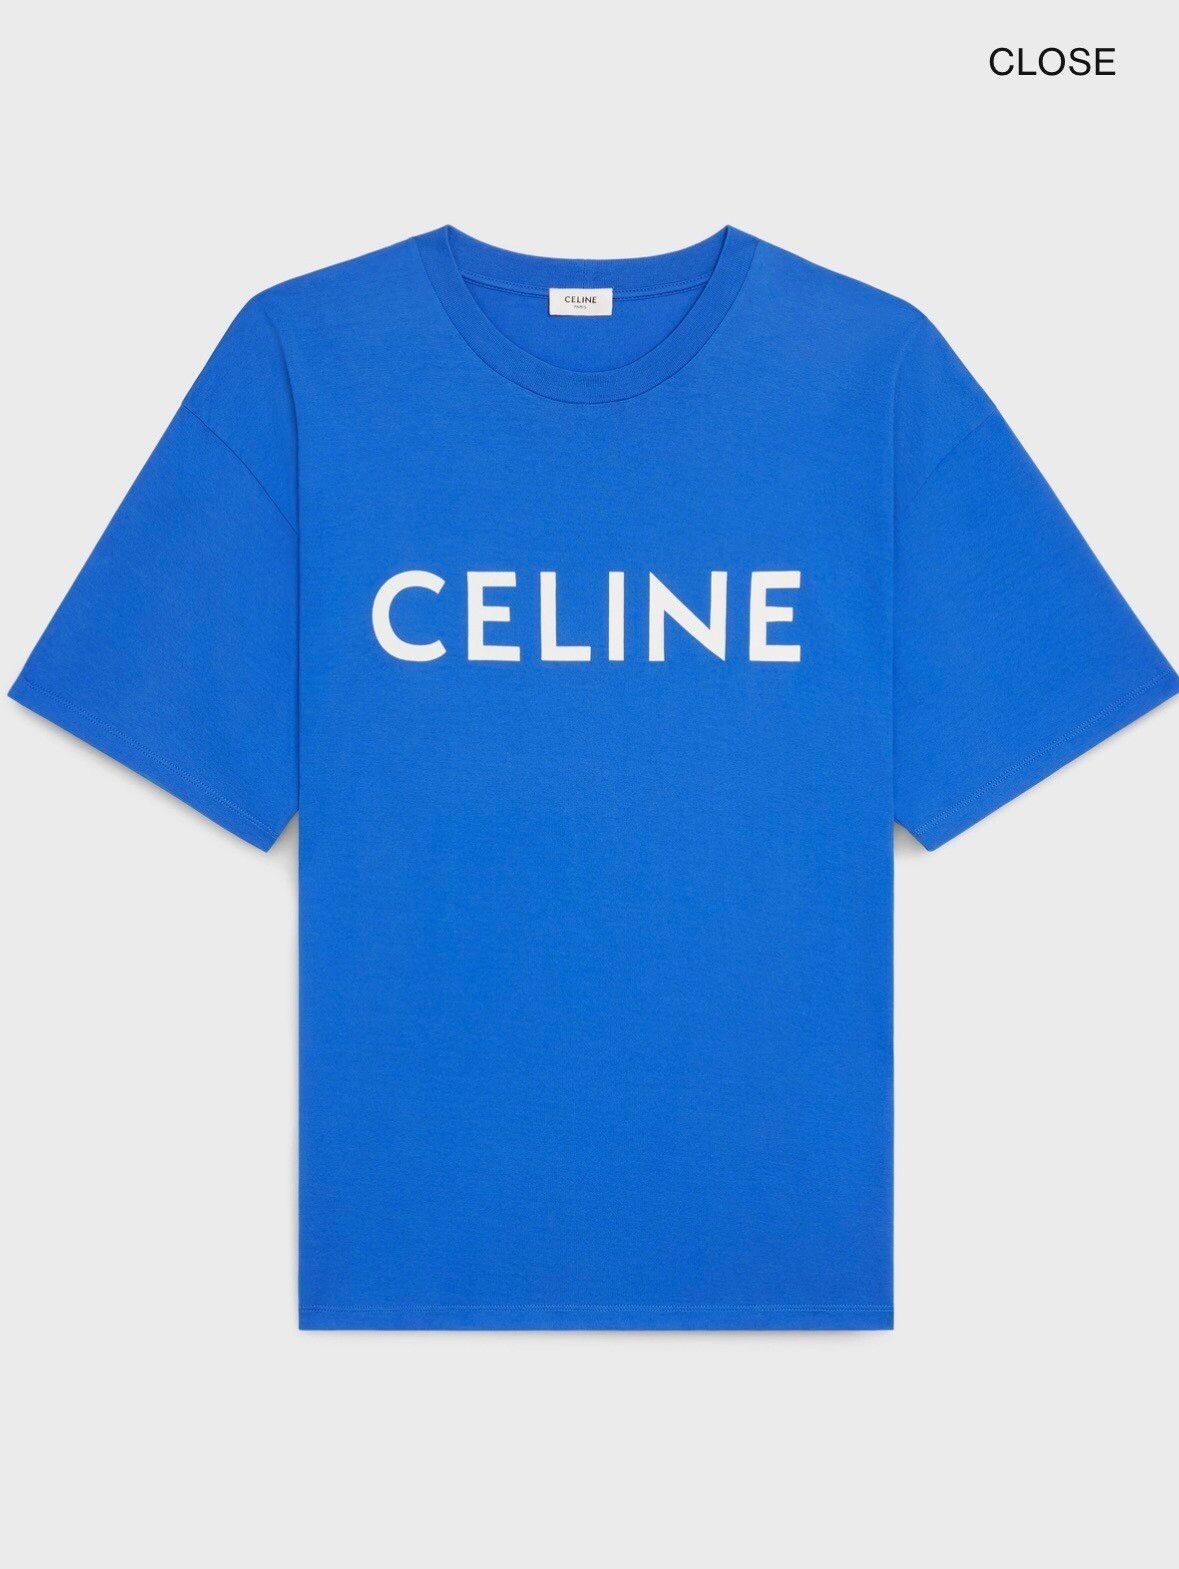 Celine Celine by Hedi Slimane Blue logo t shirt tee size M Size US M / EU 48-50 / 2 - 1 Preview